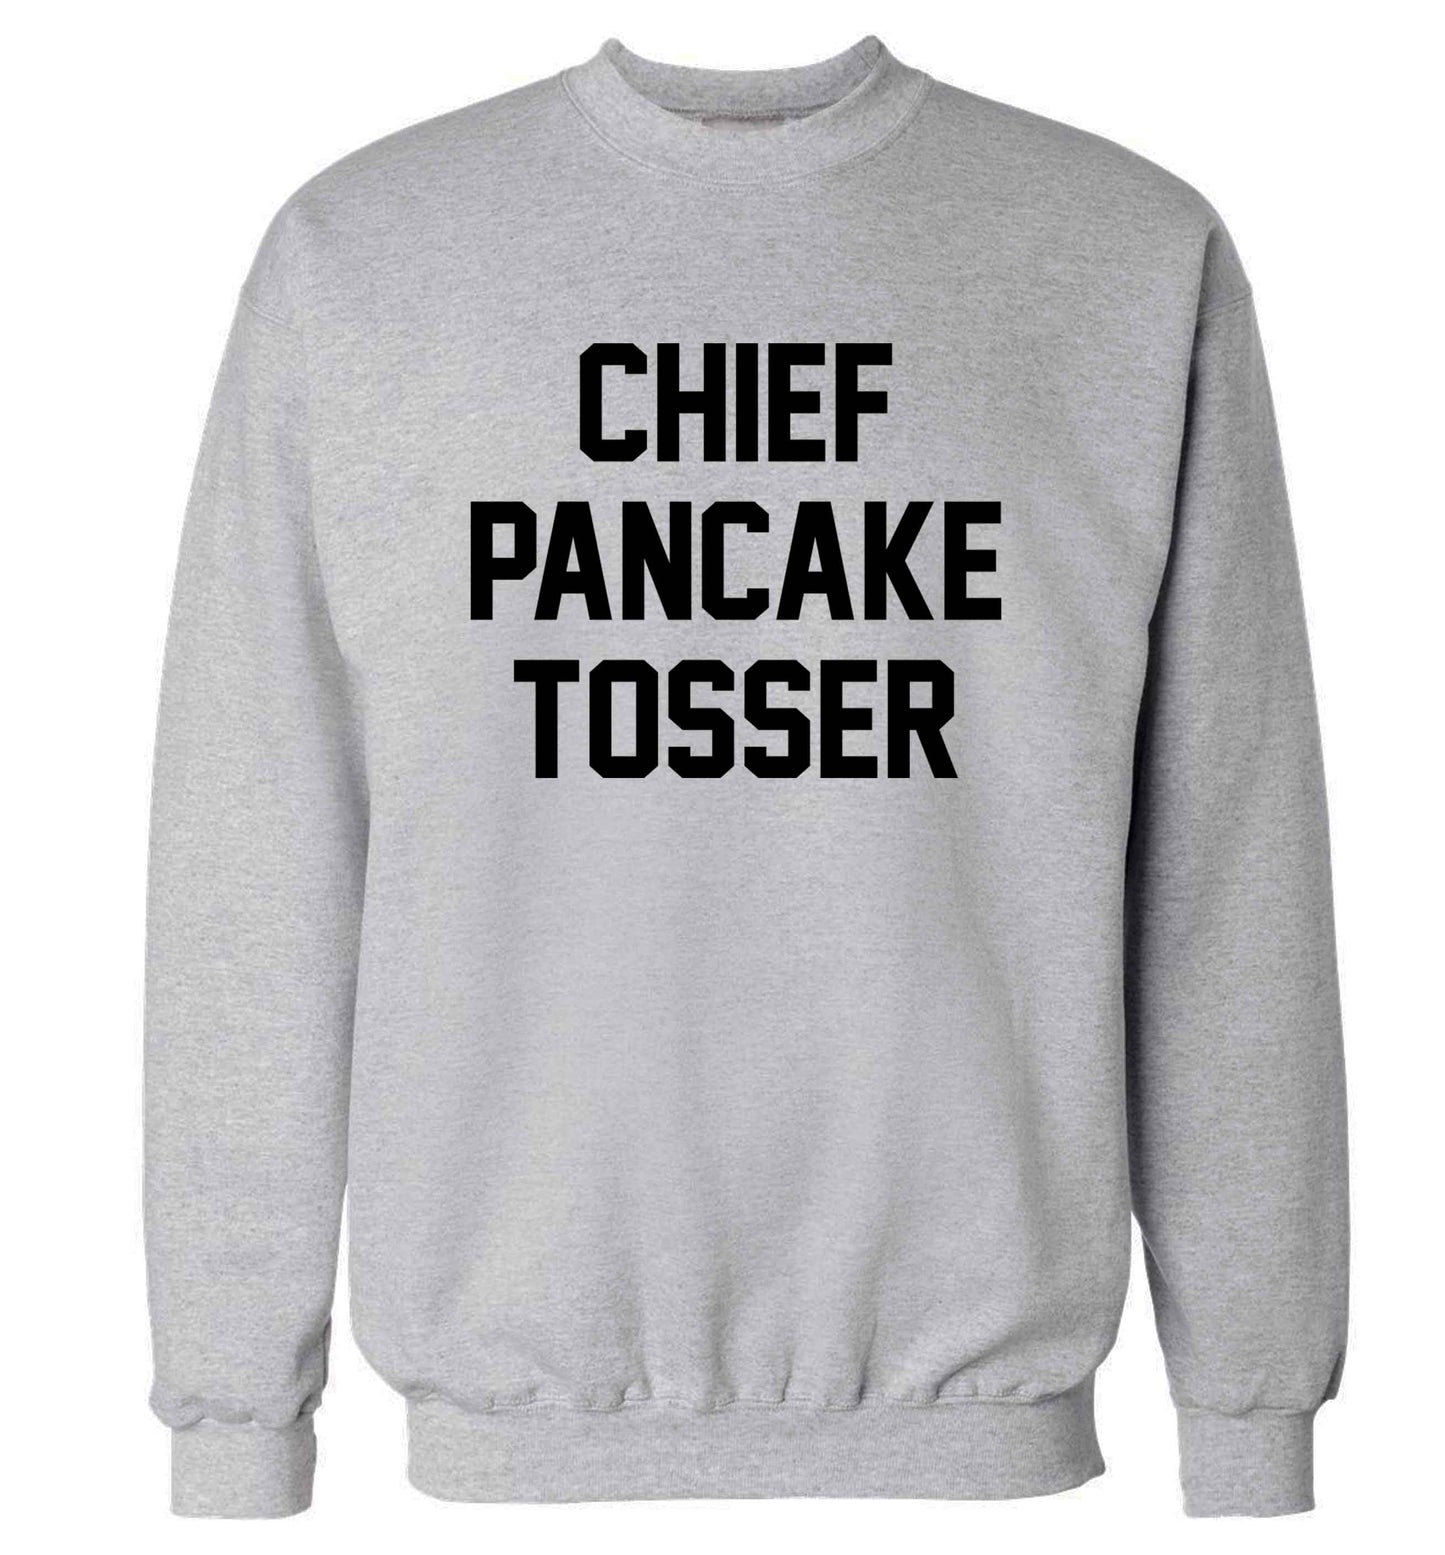 Chief pancake tosser adult's unisex grey sweater 2XL